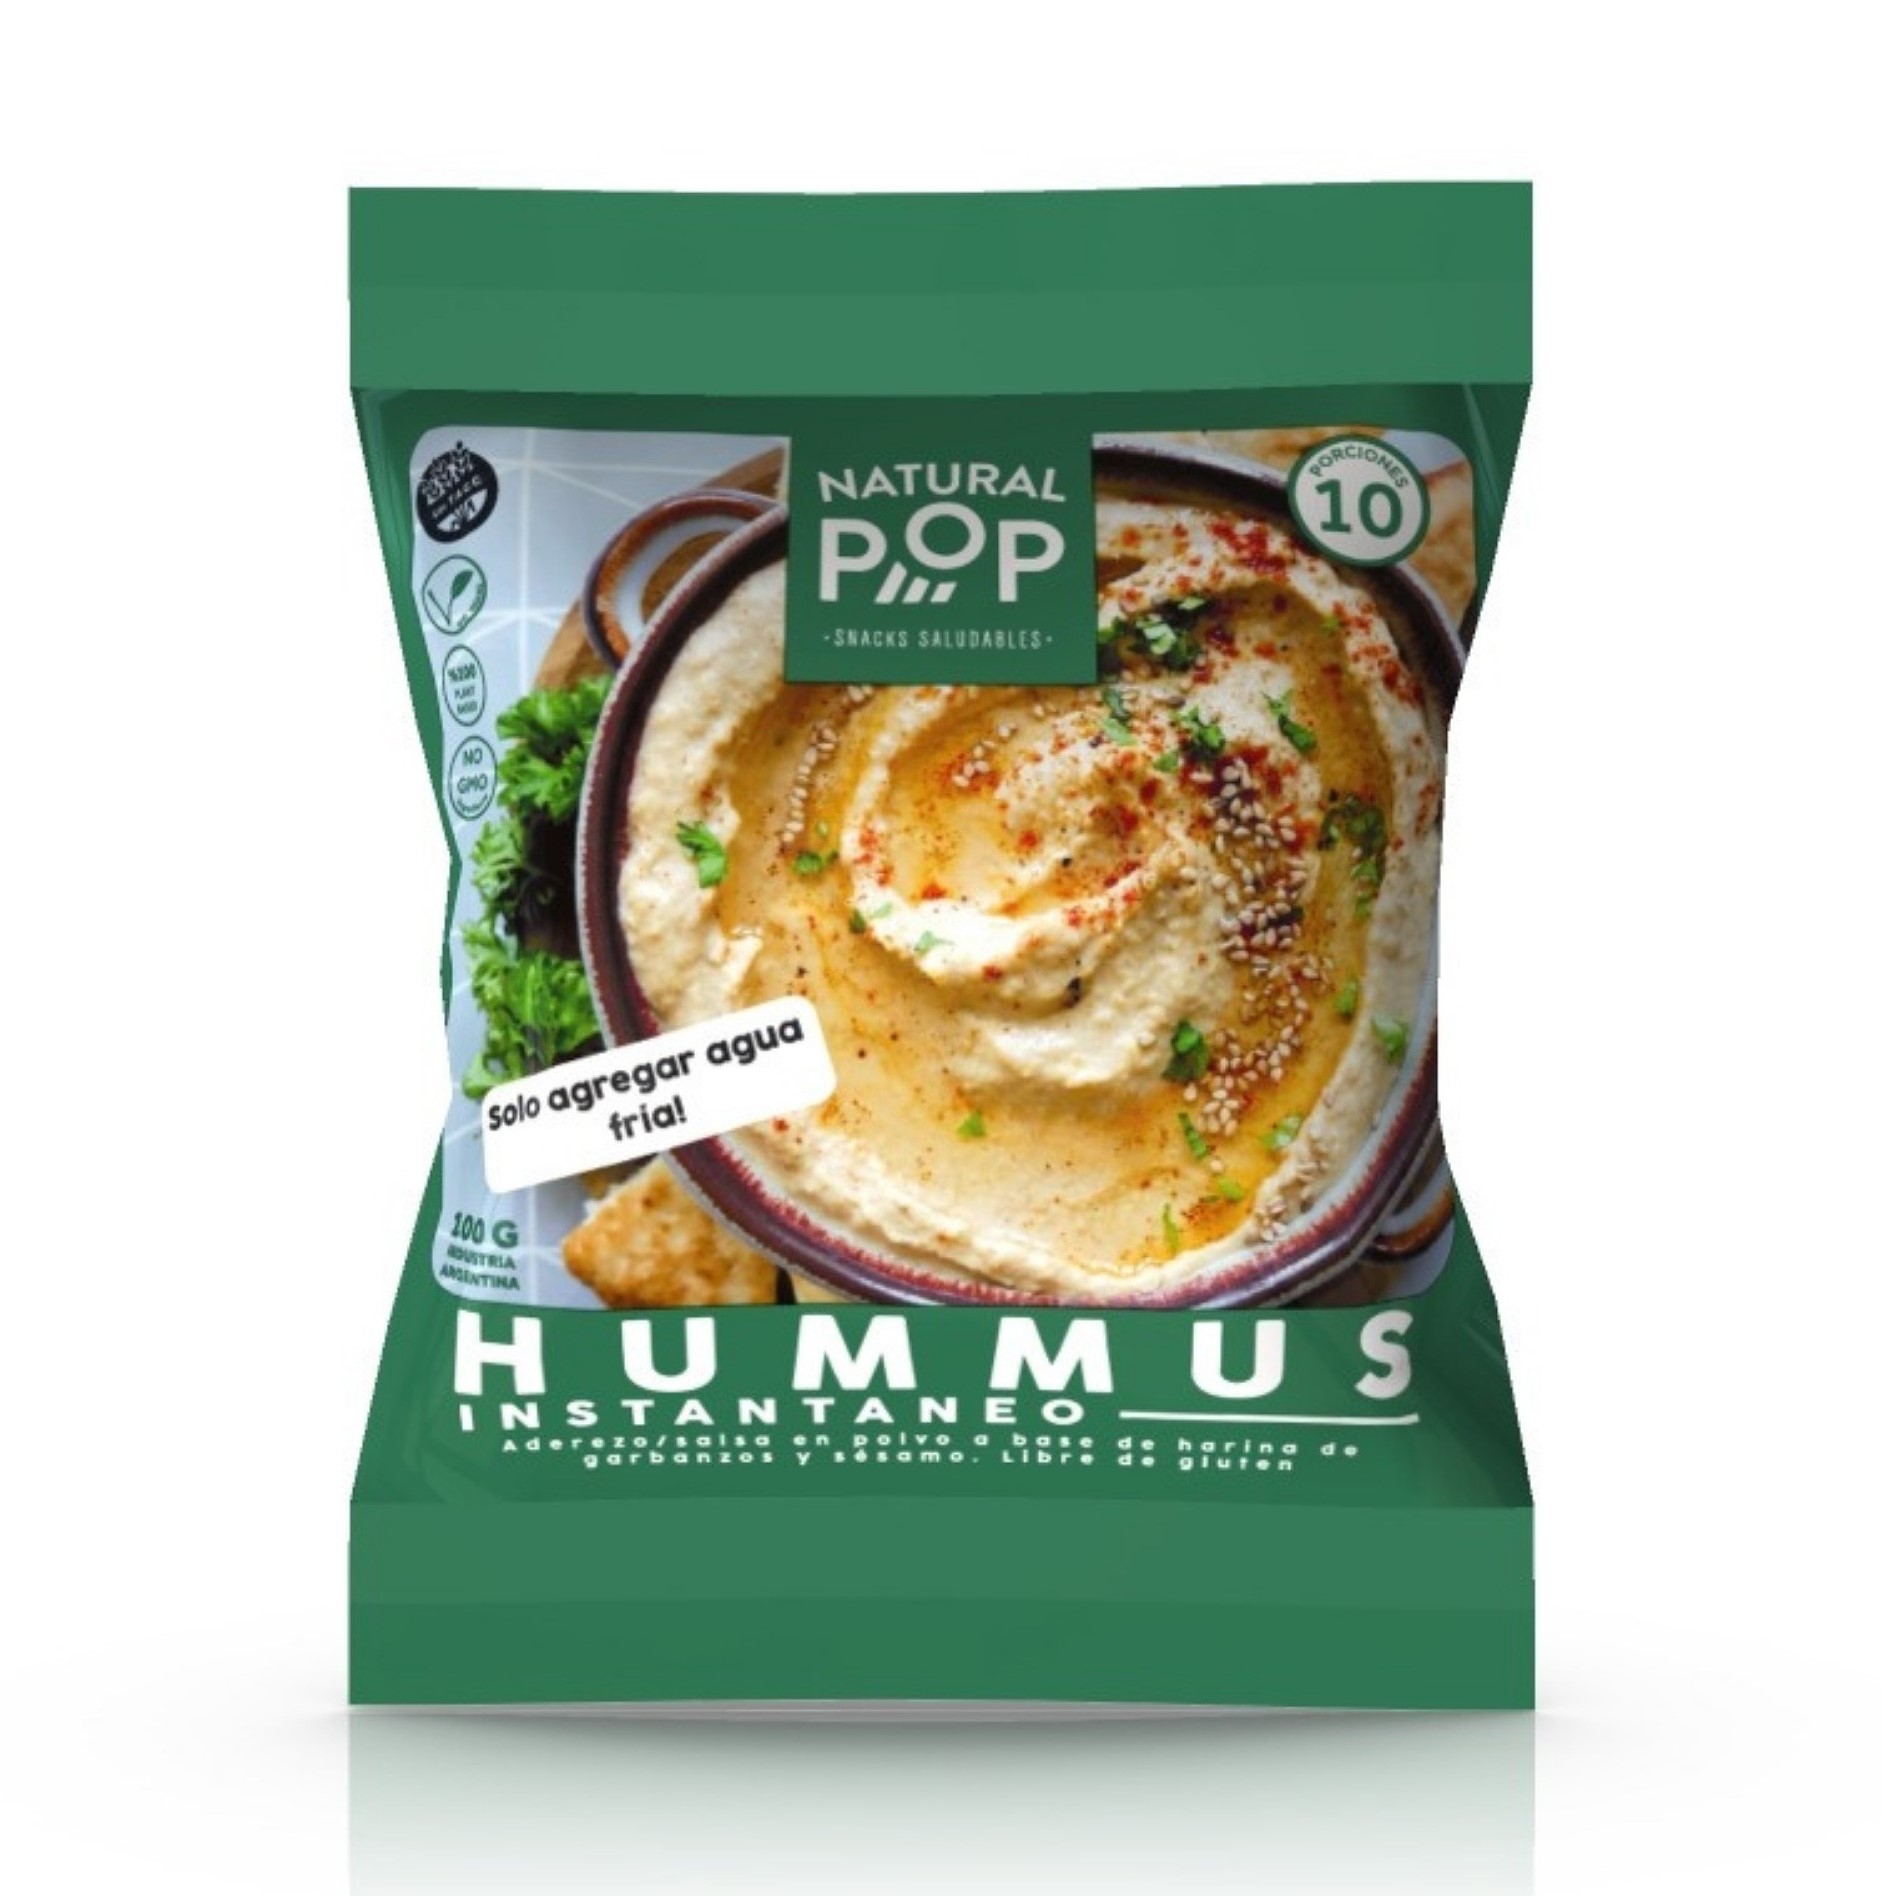 Hummus instantaneo